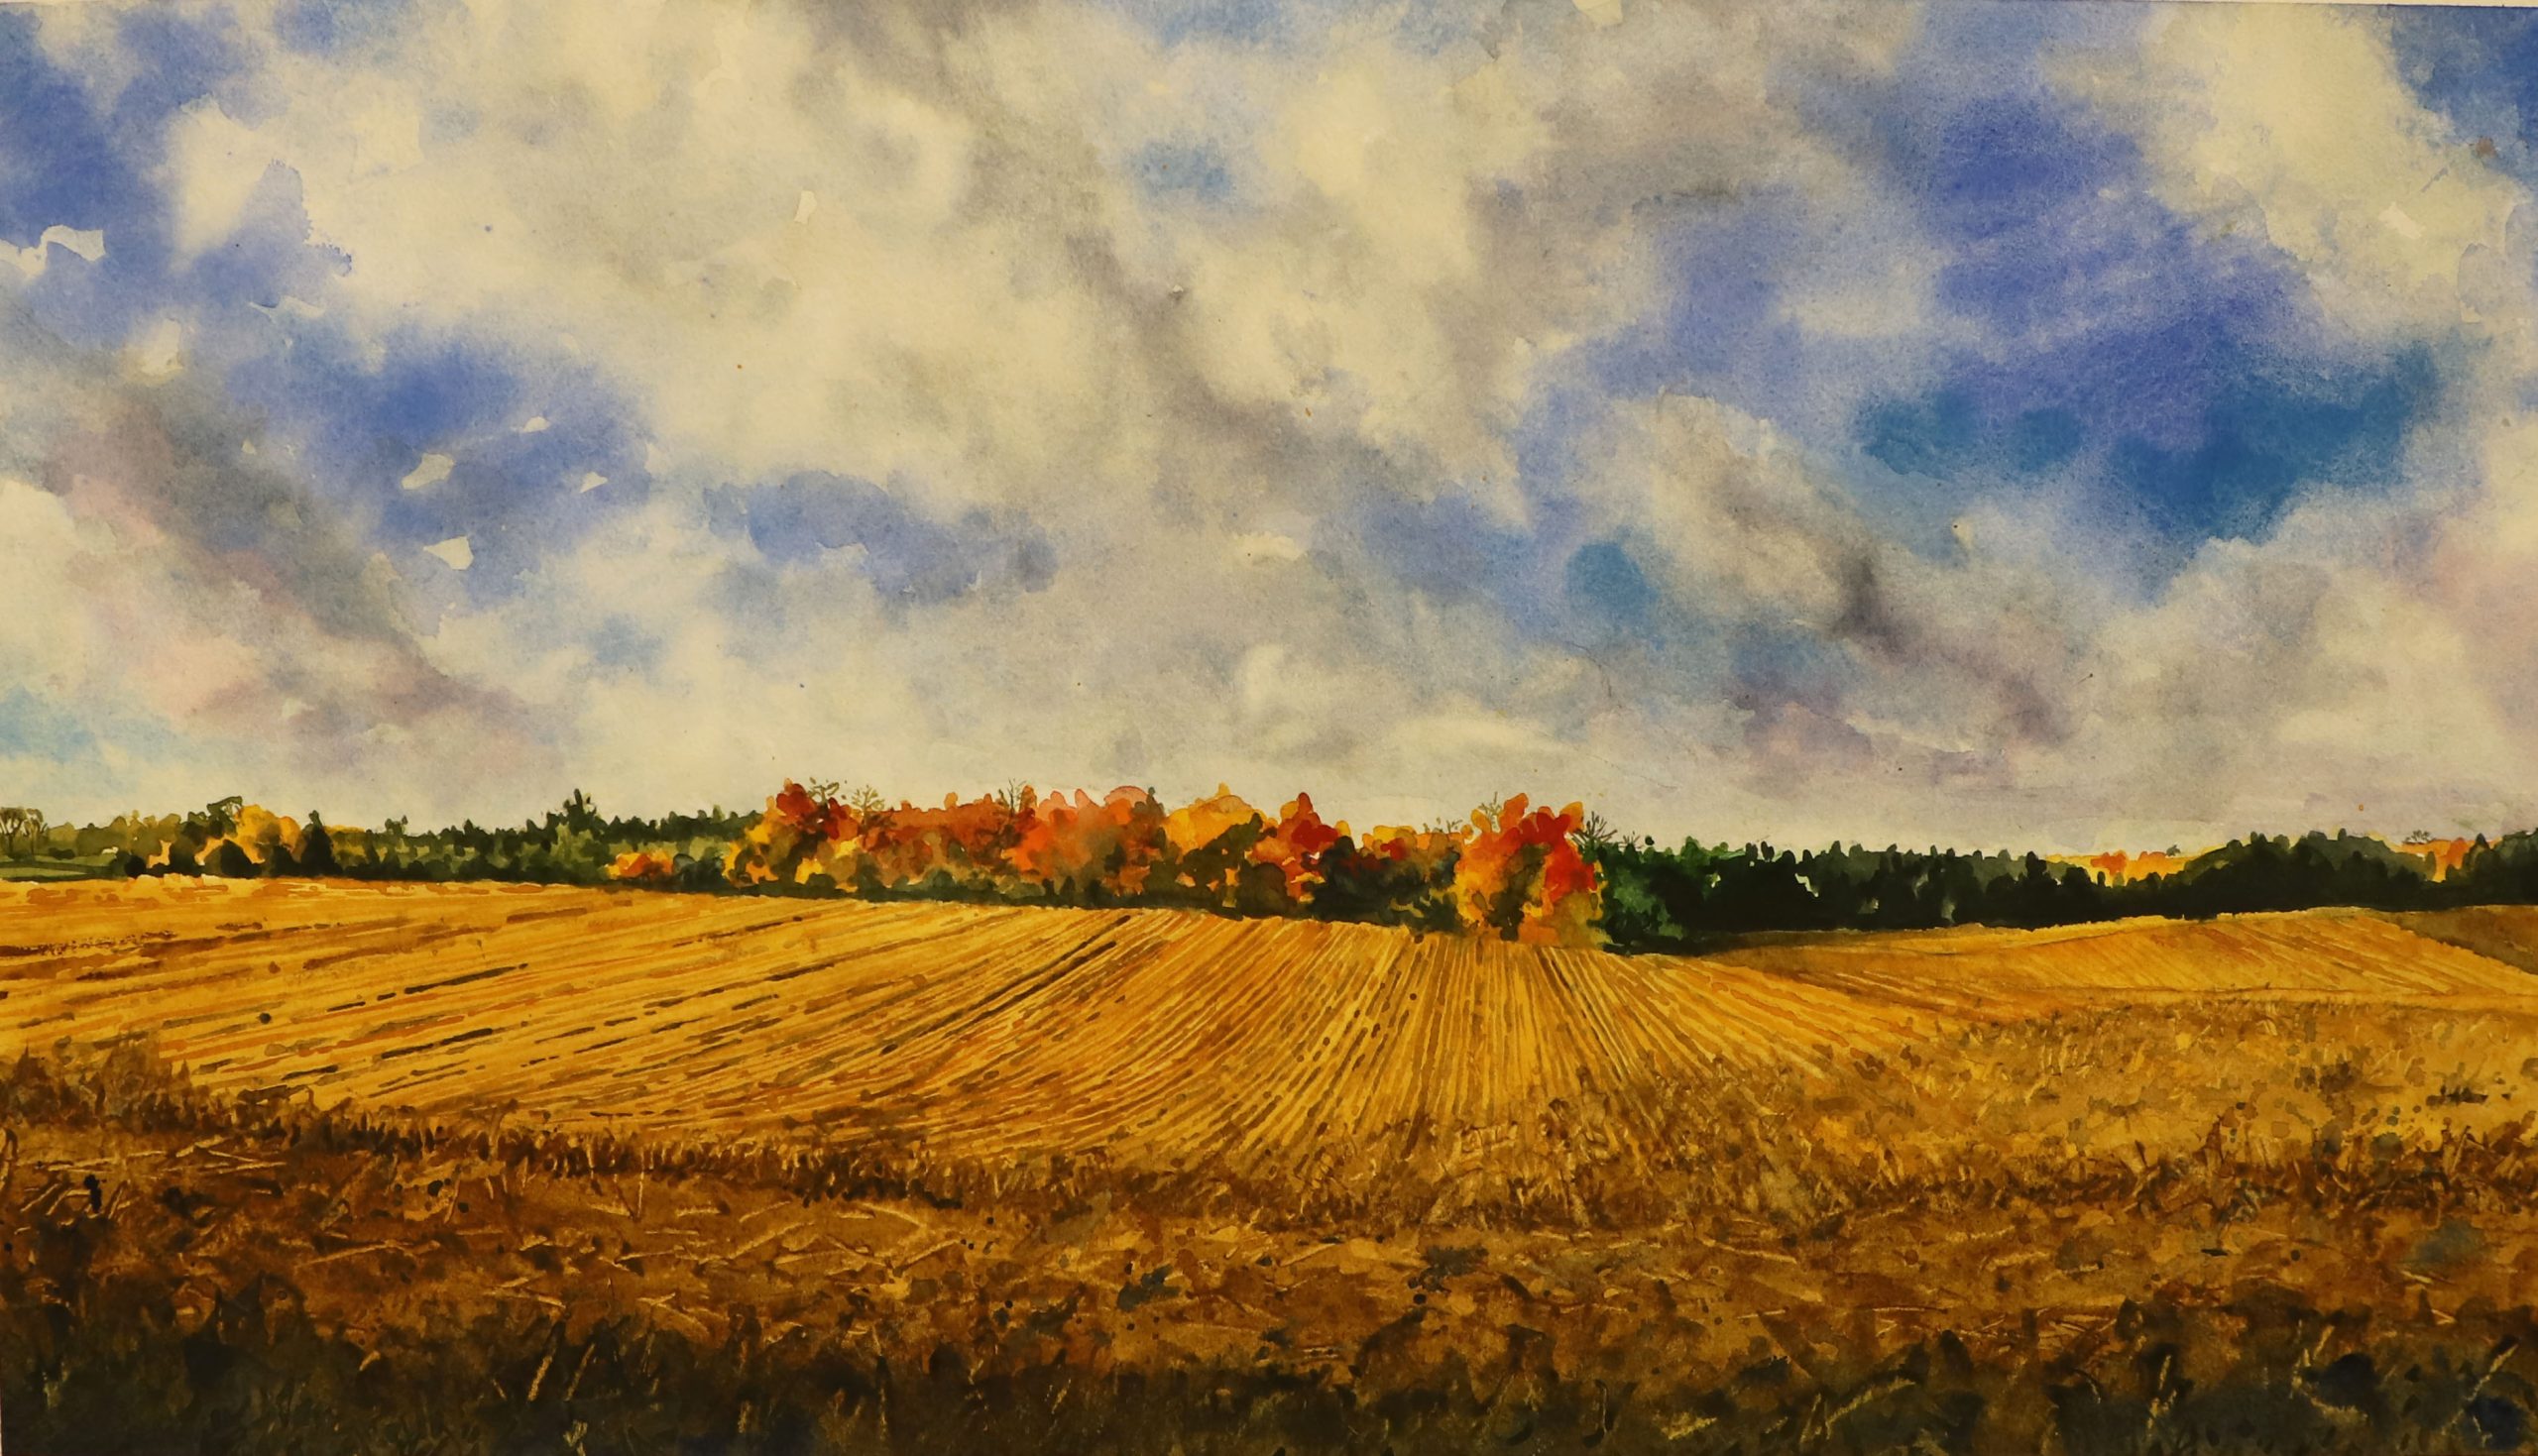 Art Show winning painting, Harvest Landscape by Roman Turczyn